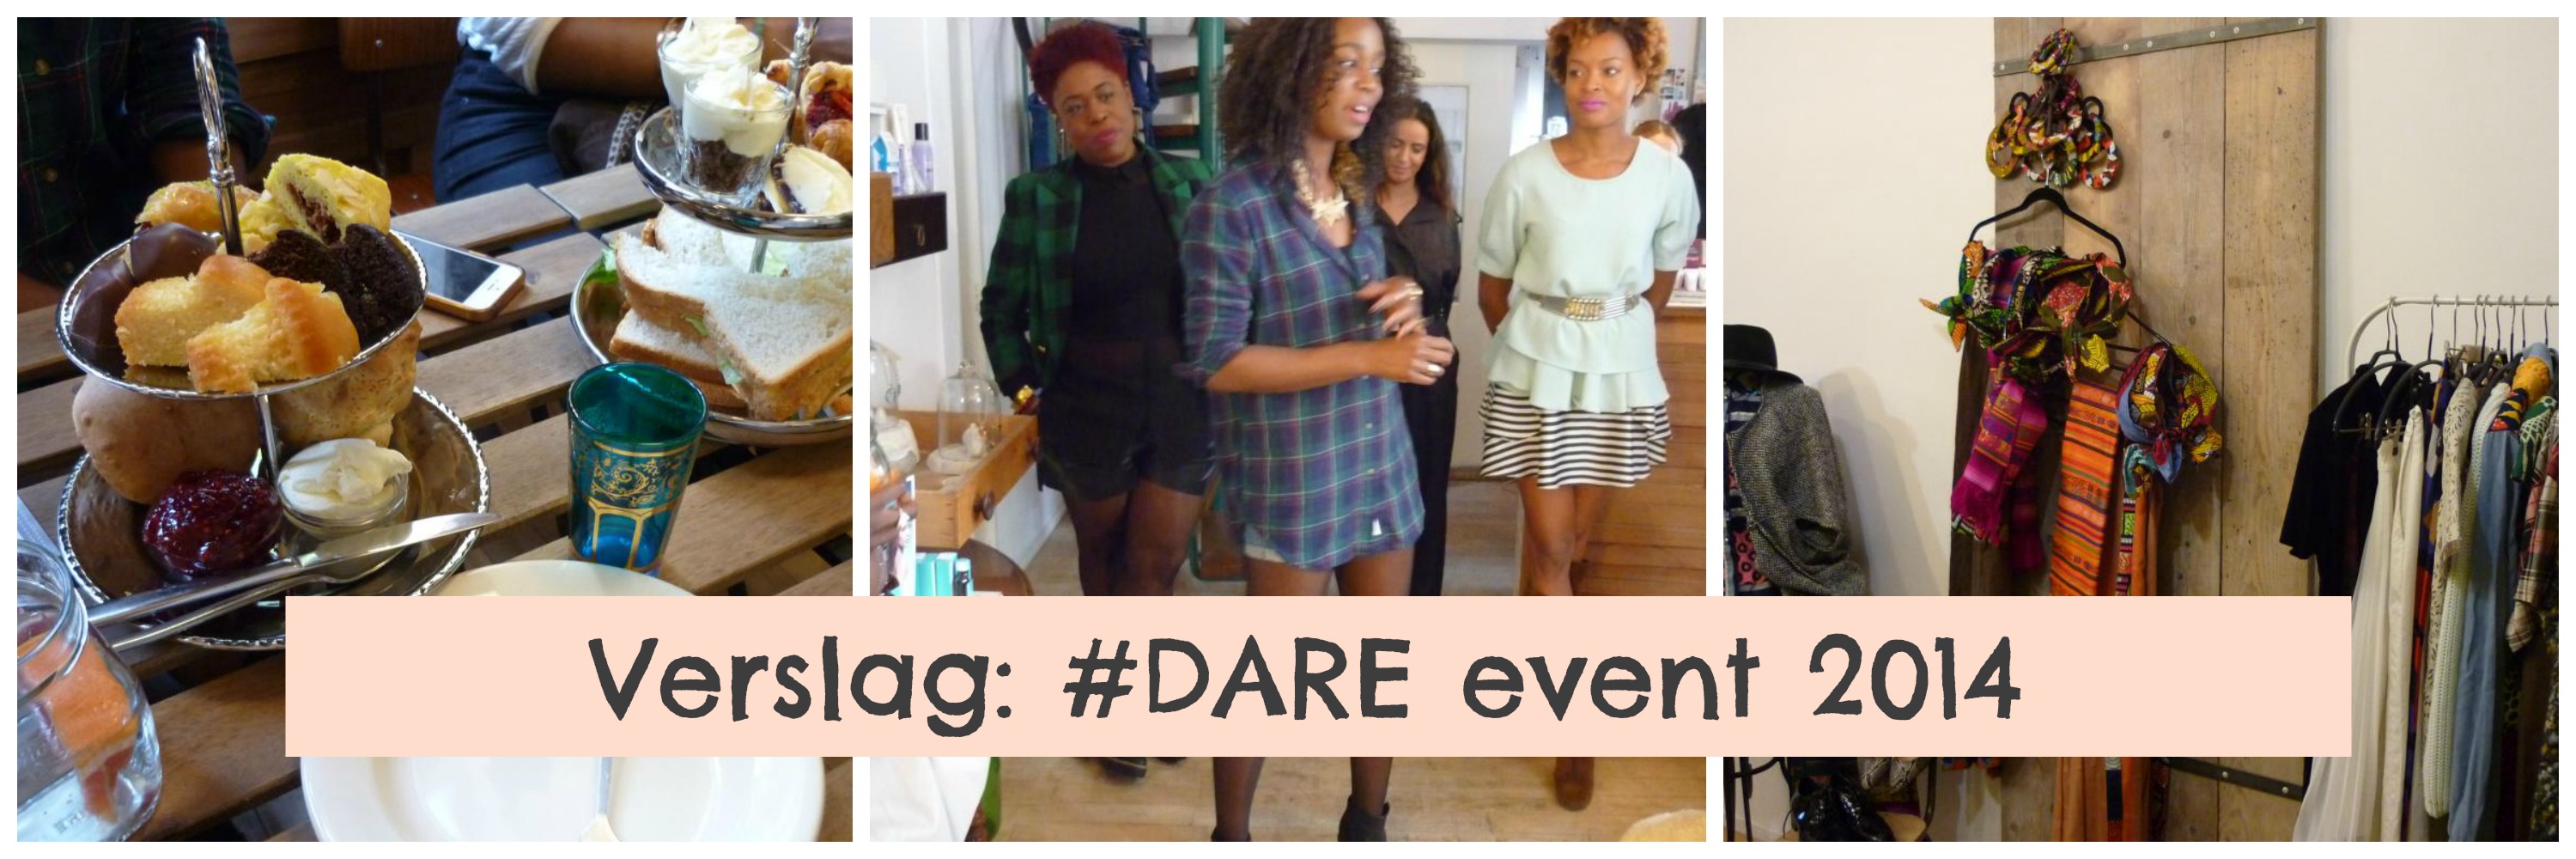 Verslag: #DARE event 2014